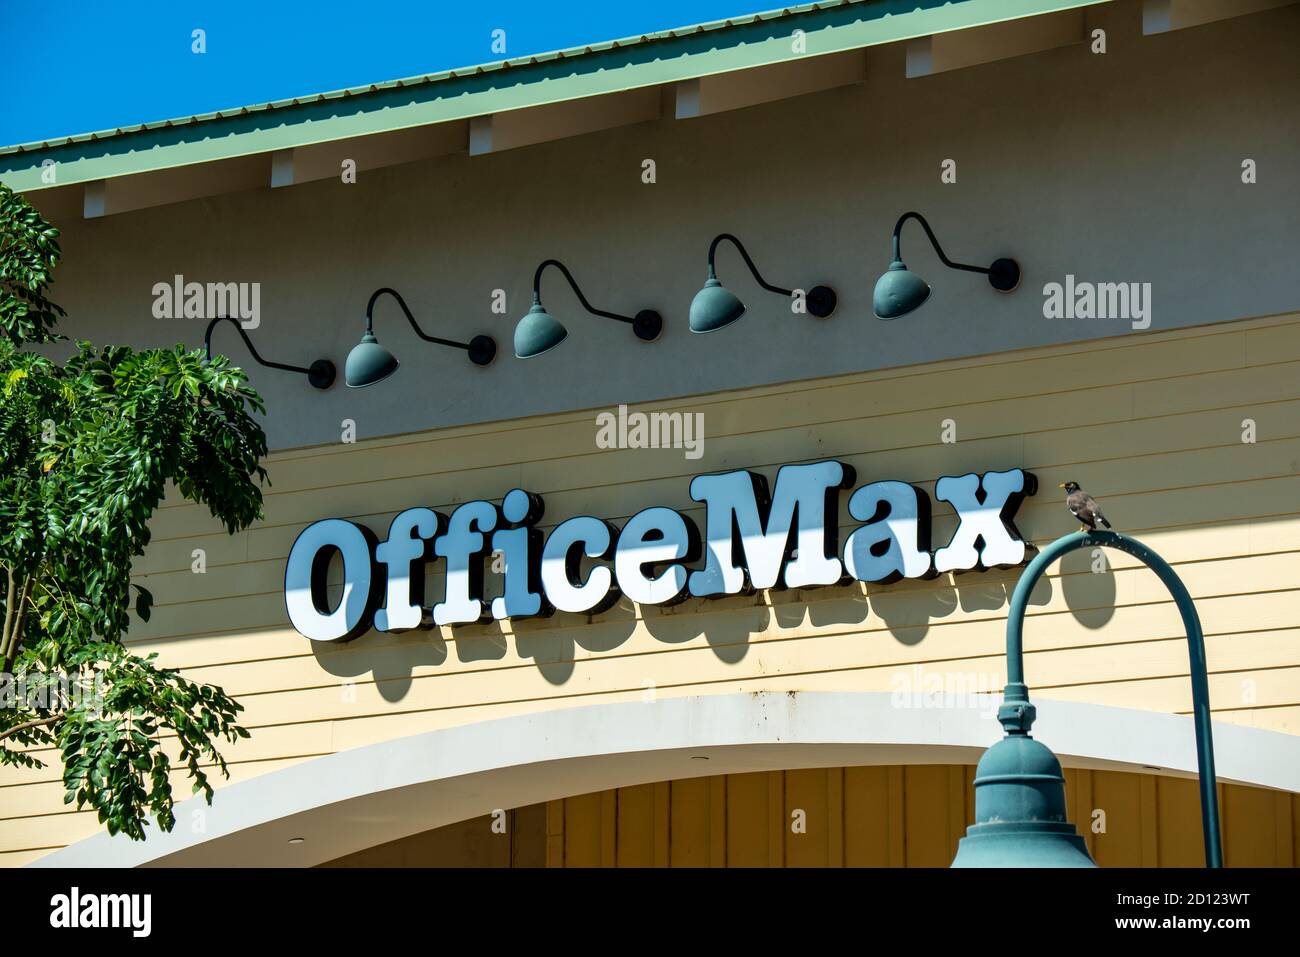 Maui Hawaii Office Max Logo On Their Building In Lahaina 2D123WT 